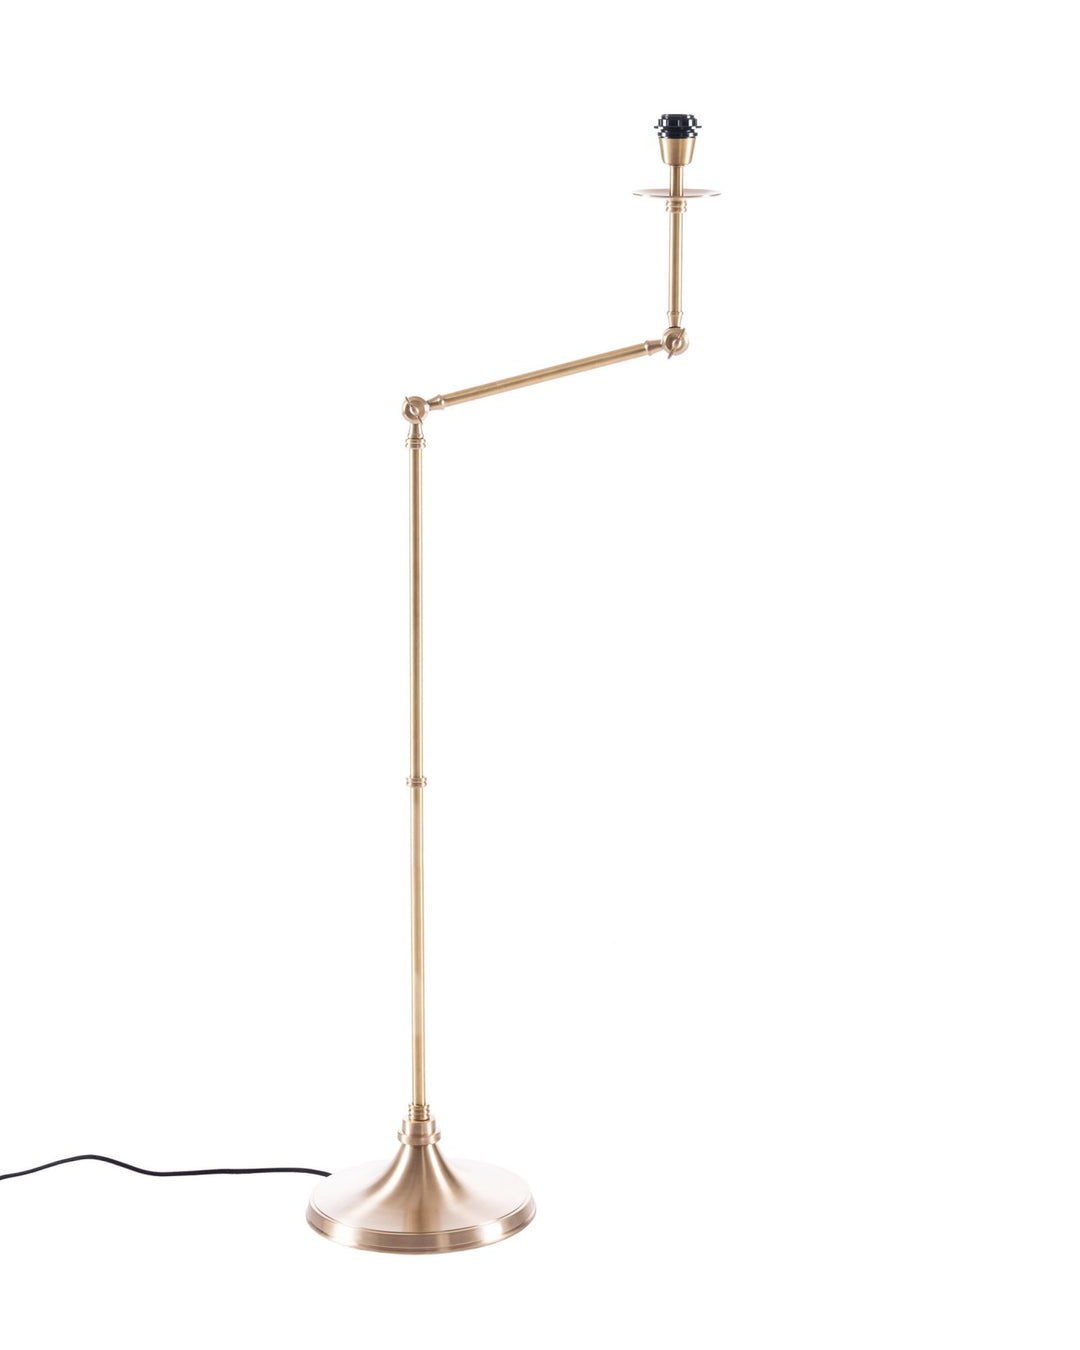 Mind-the-gap-Kramer-brass-floor-lamp-lighting-standard-lamp-adjustable-jointed-base 